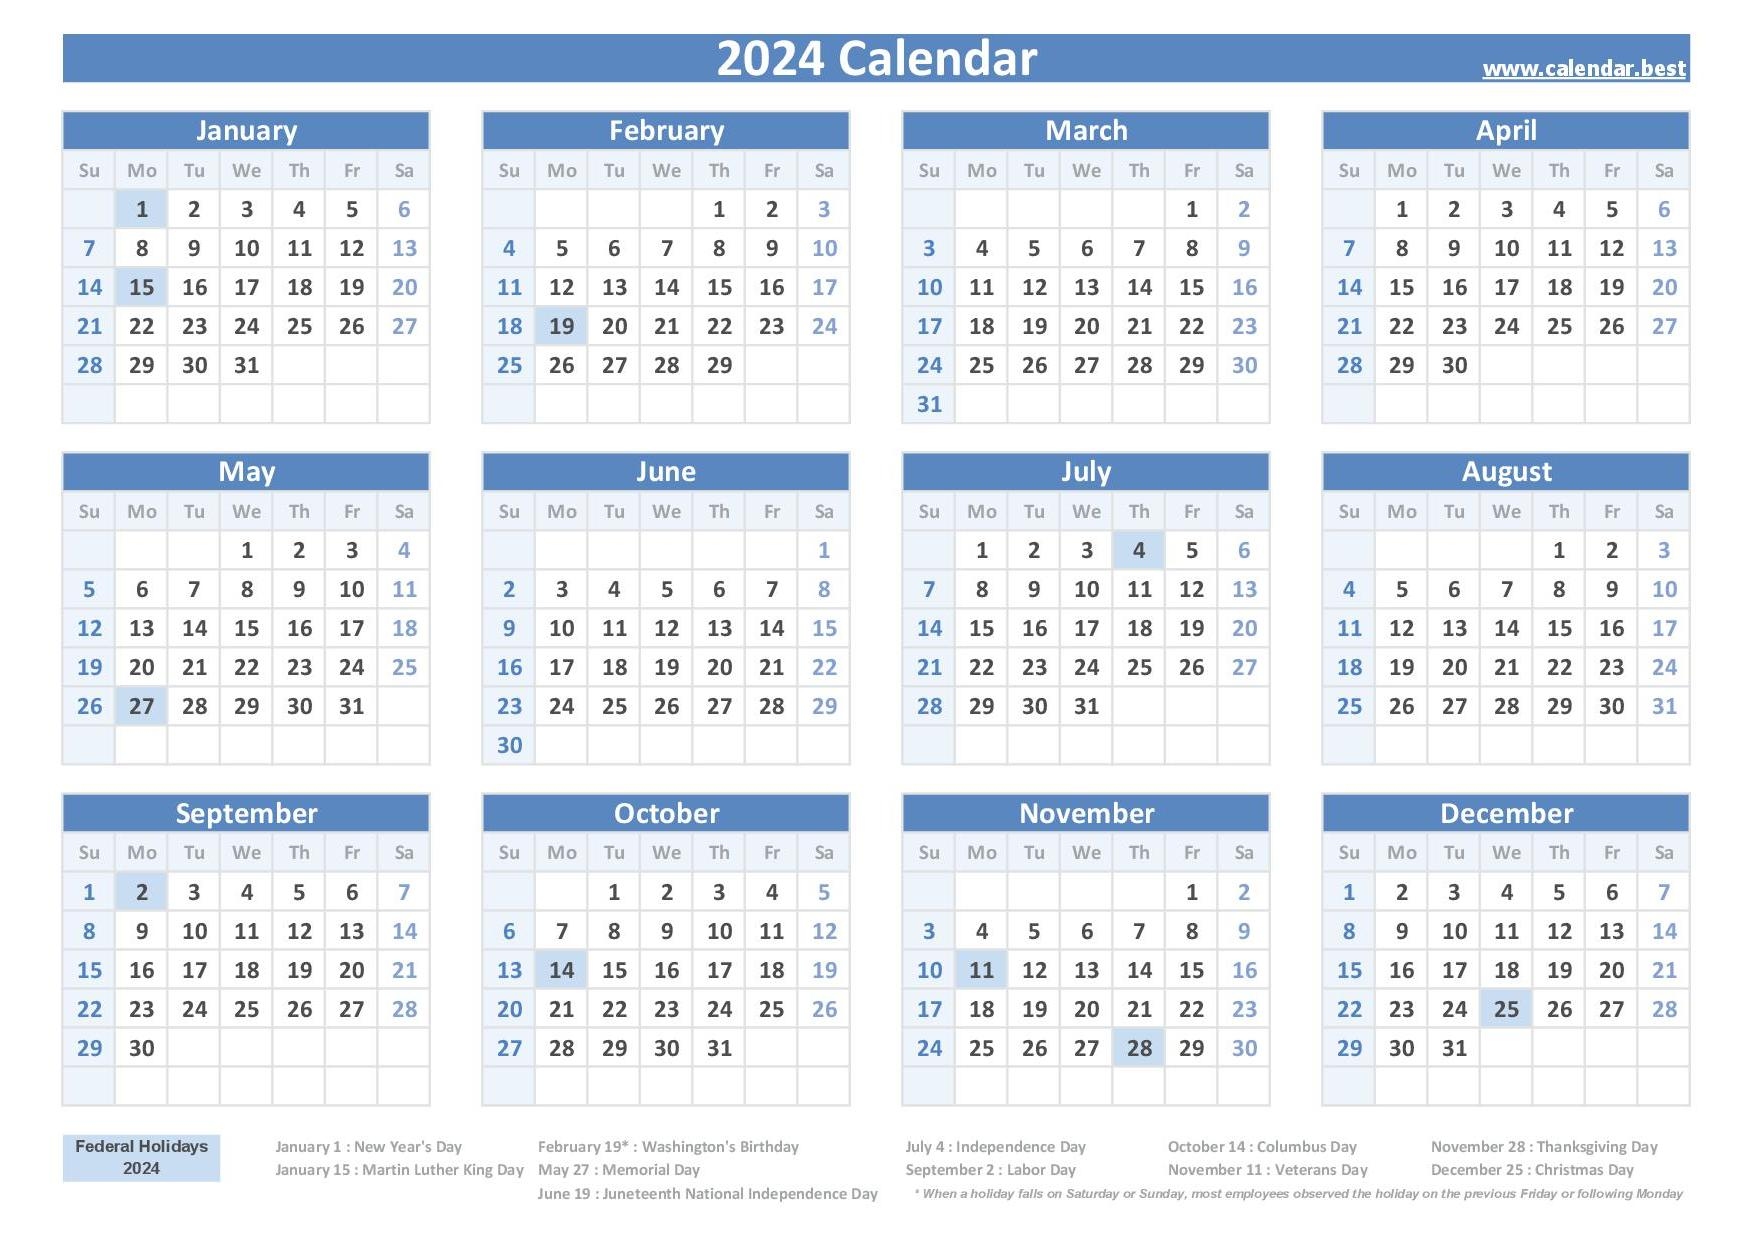 2024 Federal Holidays List And 2024 Calendar With Holidays To Print | Free Printable 2024 Calendar With Federal Holidays